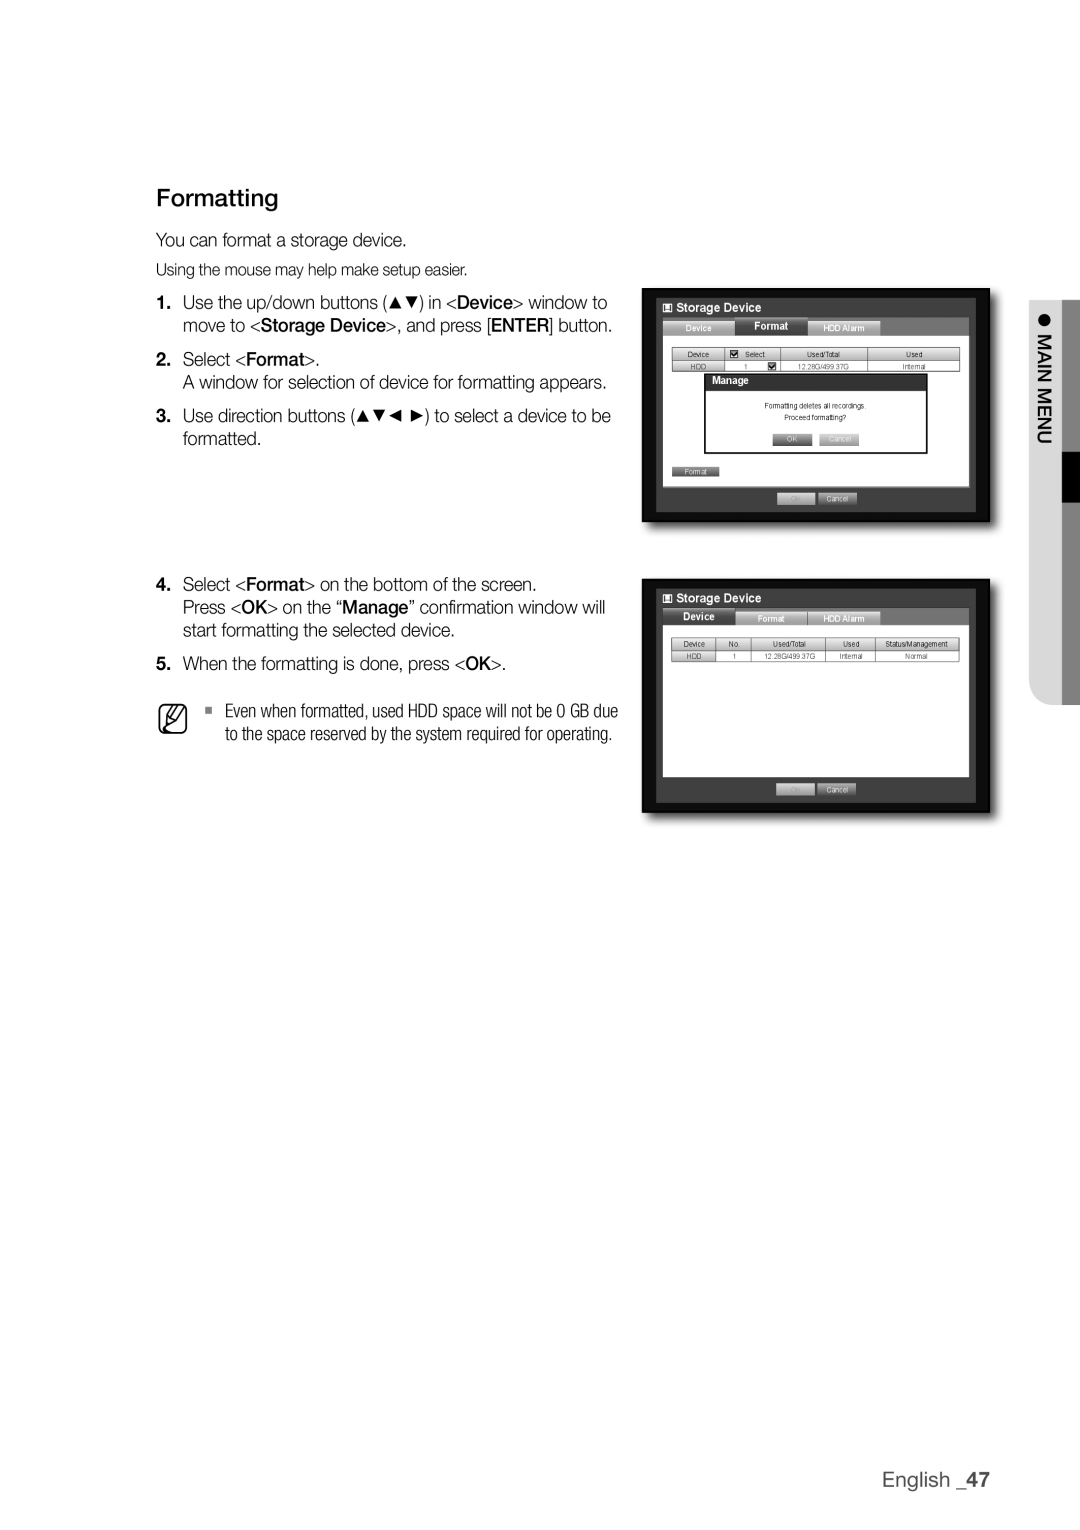 Samsung SDR3100 user manual Formatting, English _47 